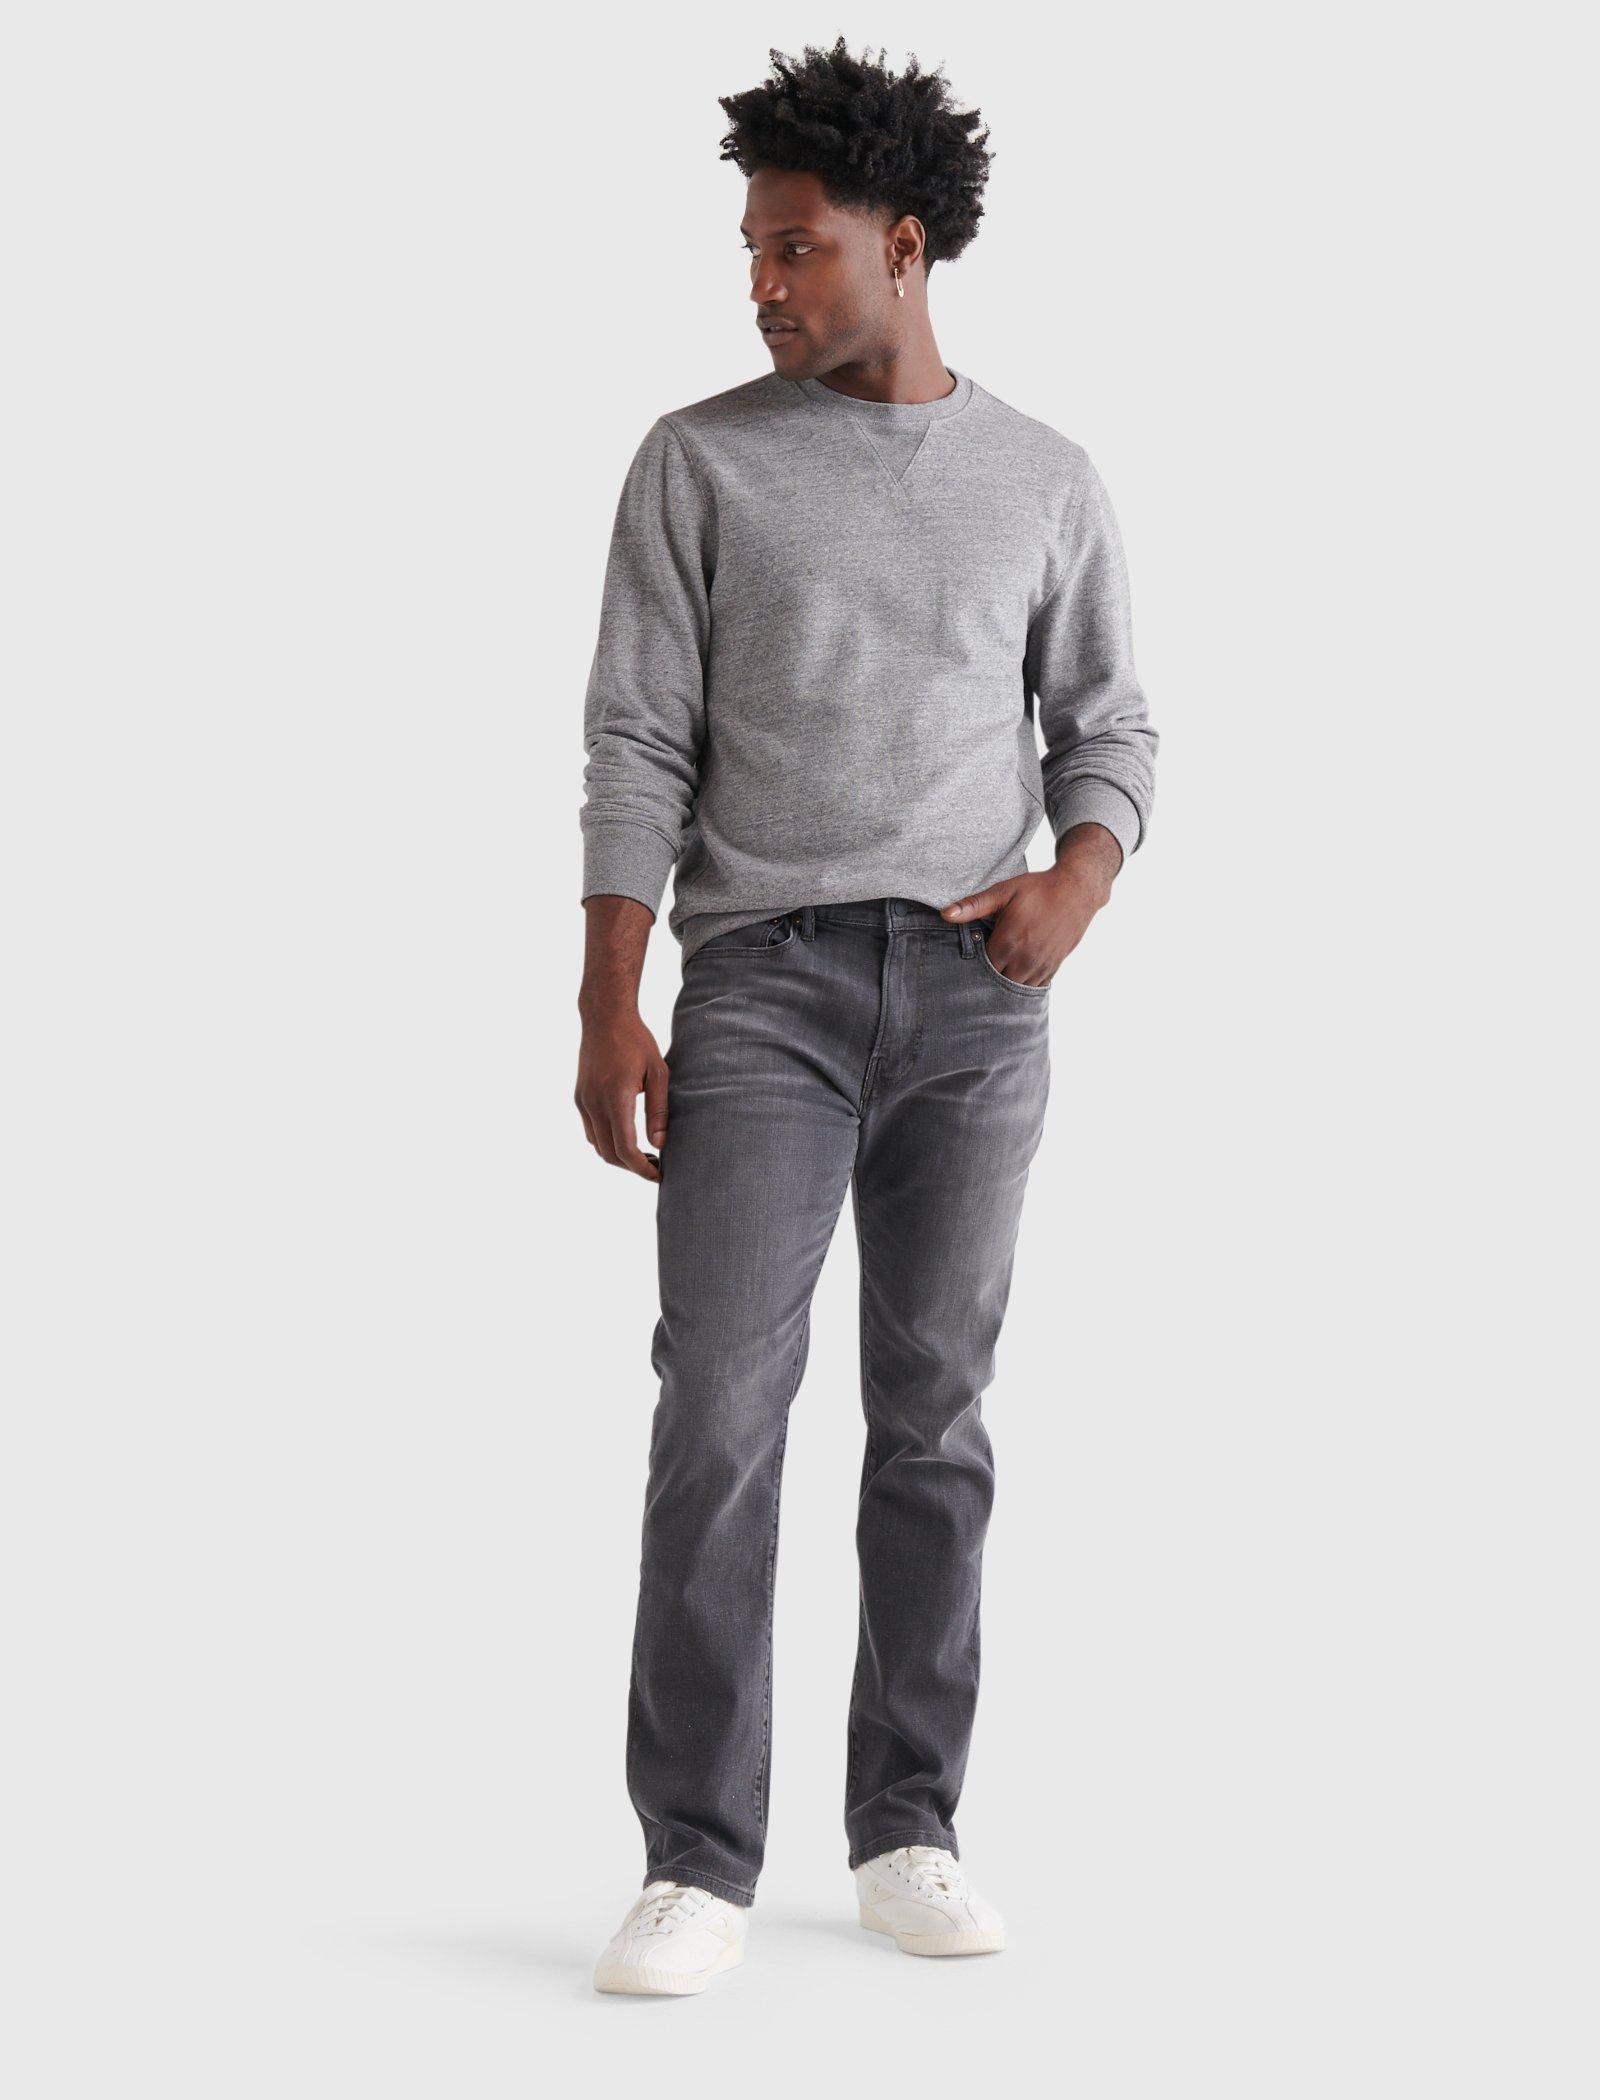 mens designer jeans sale clearance